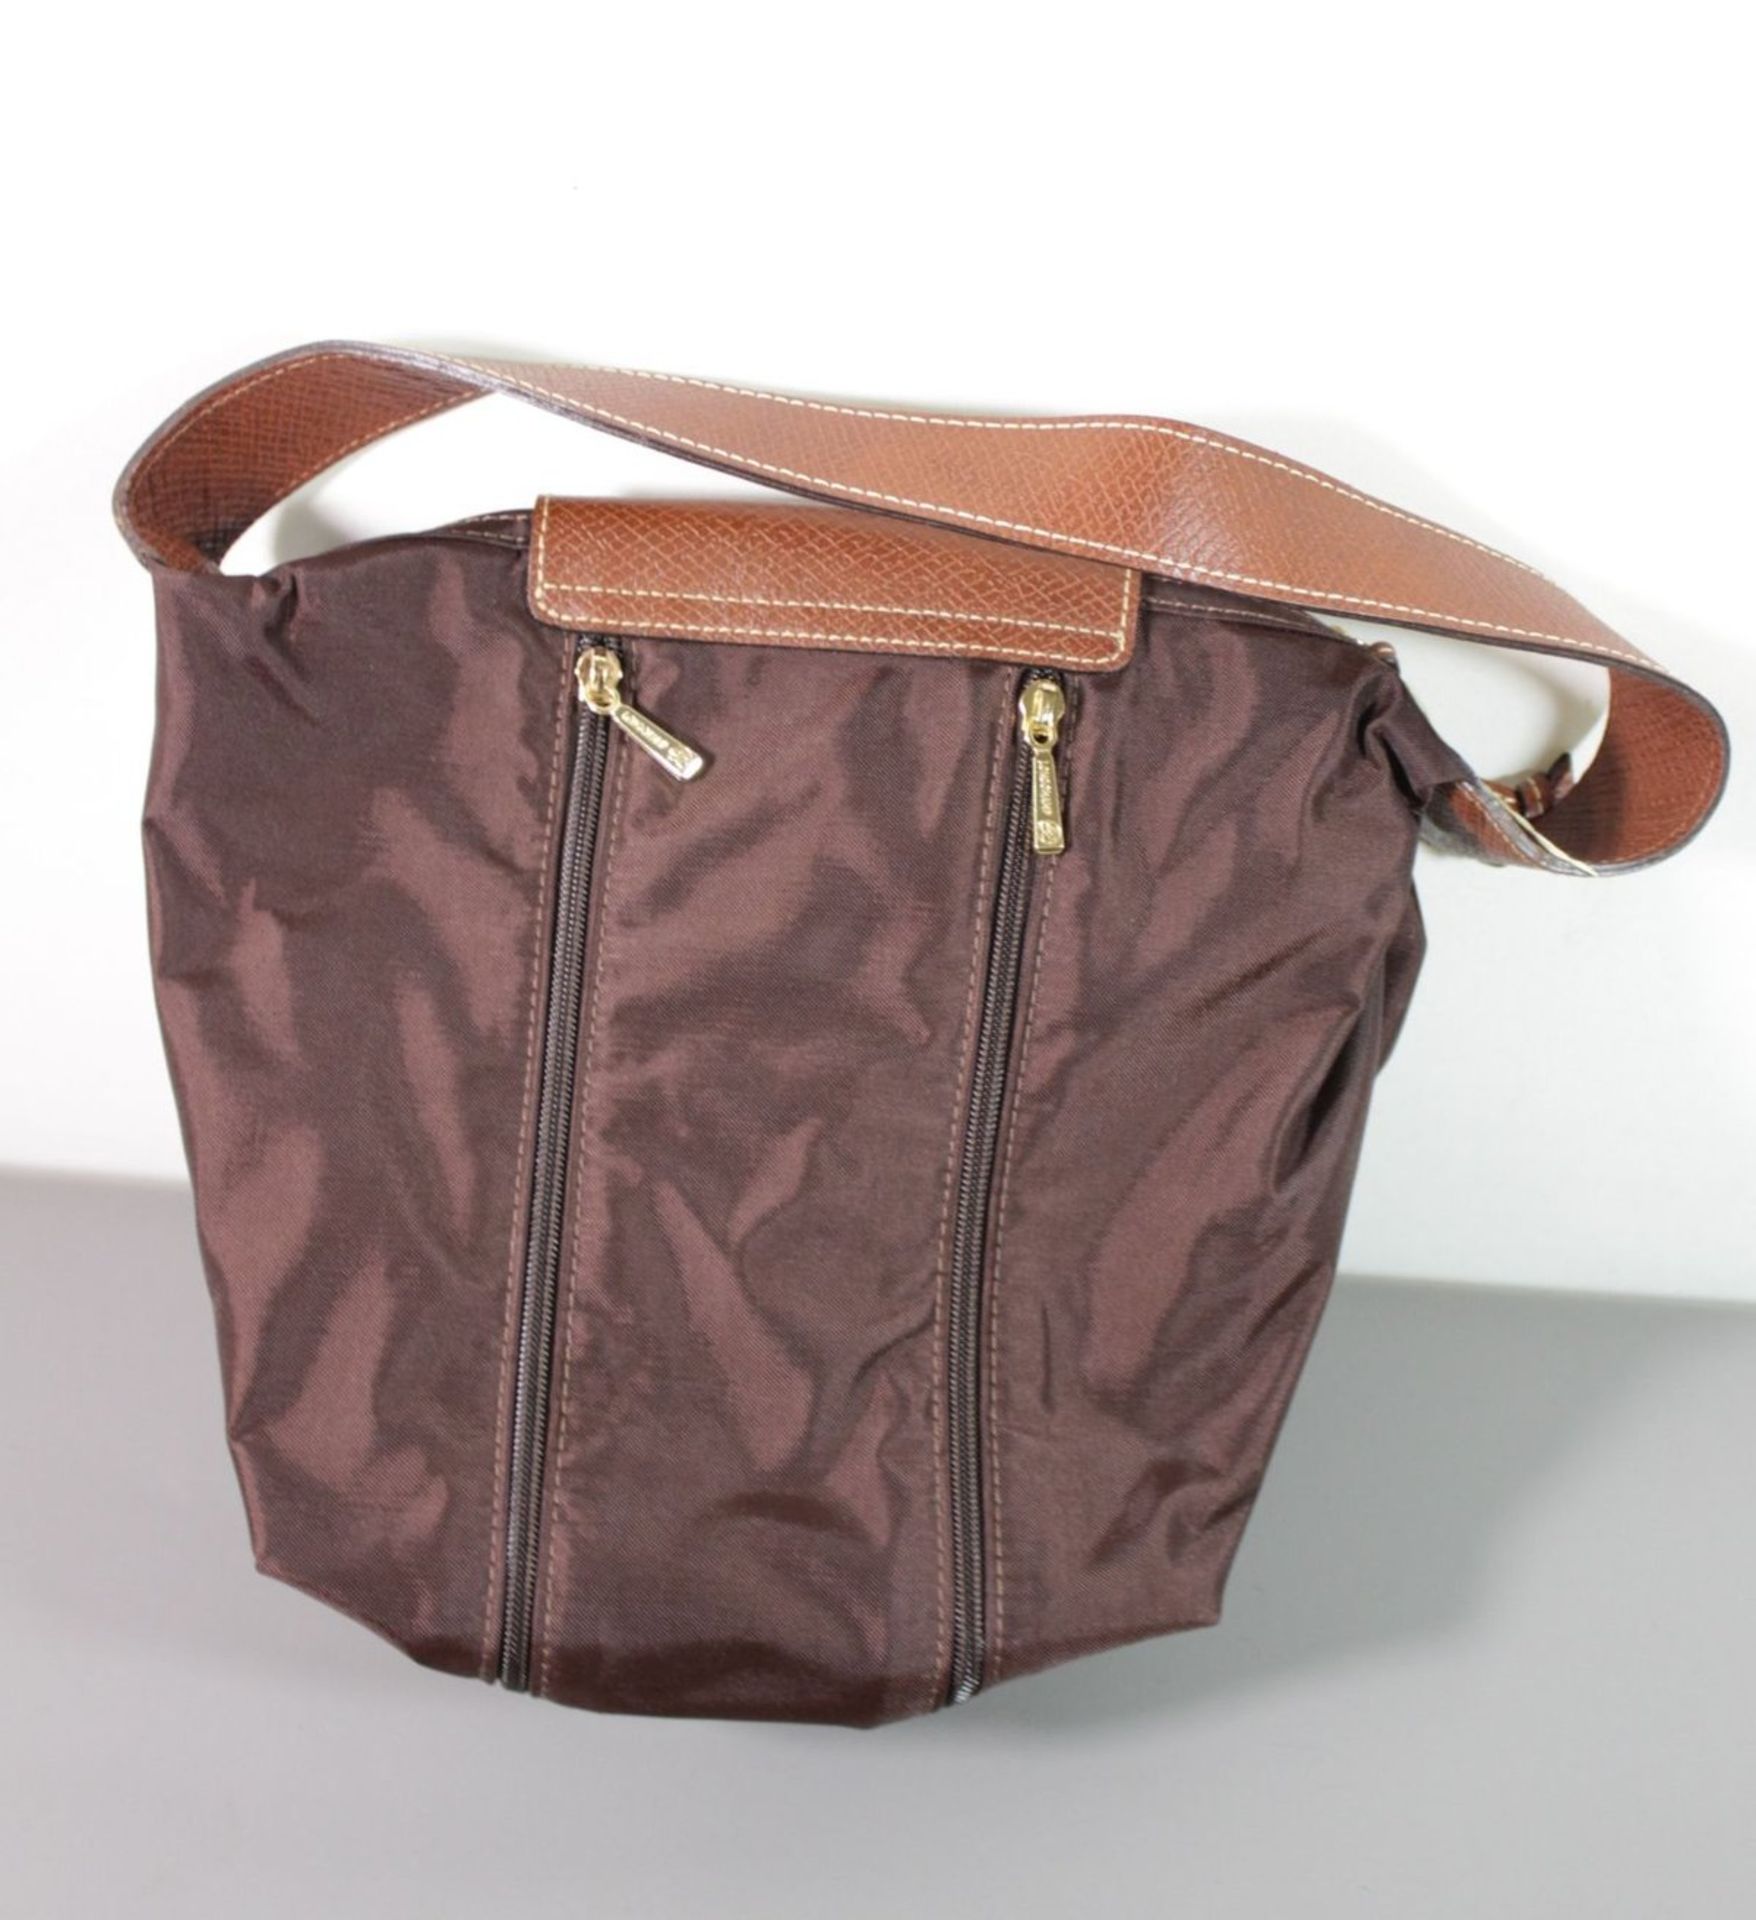 Longchamp-Tasche, neuwertig, ca. 25 x 30cm.  - Bild 3 aus 6